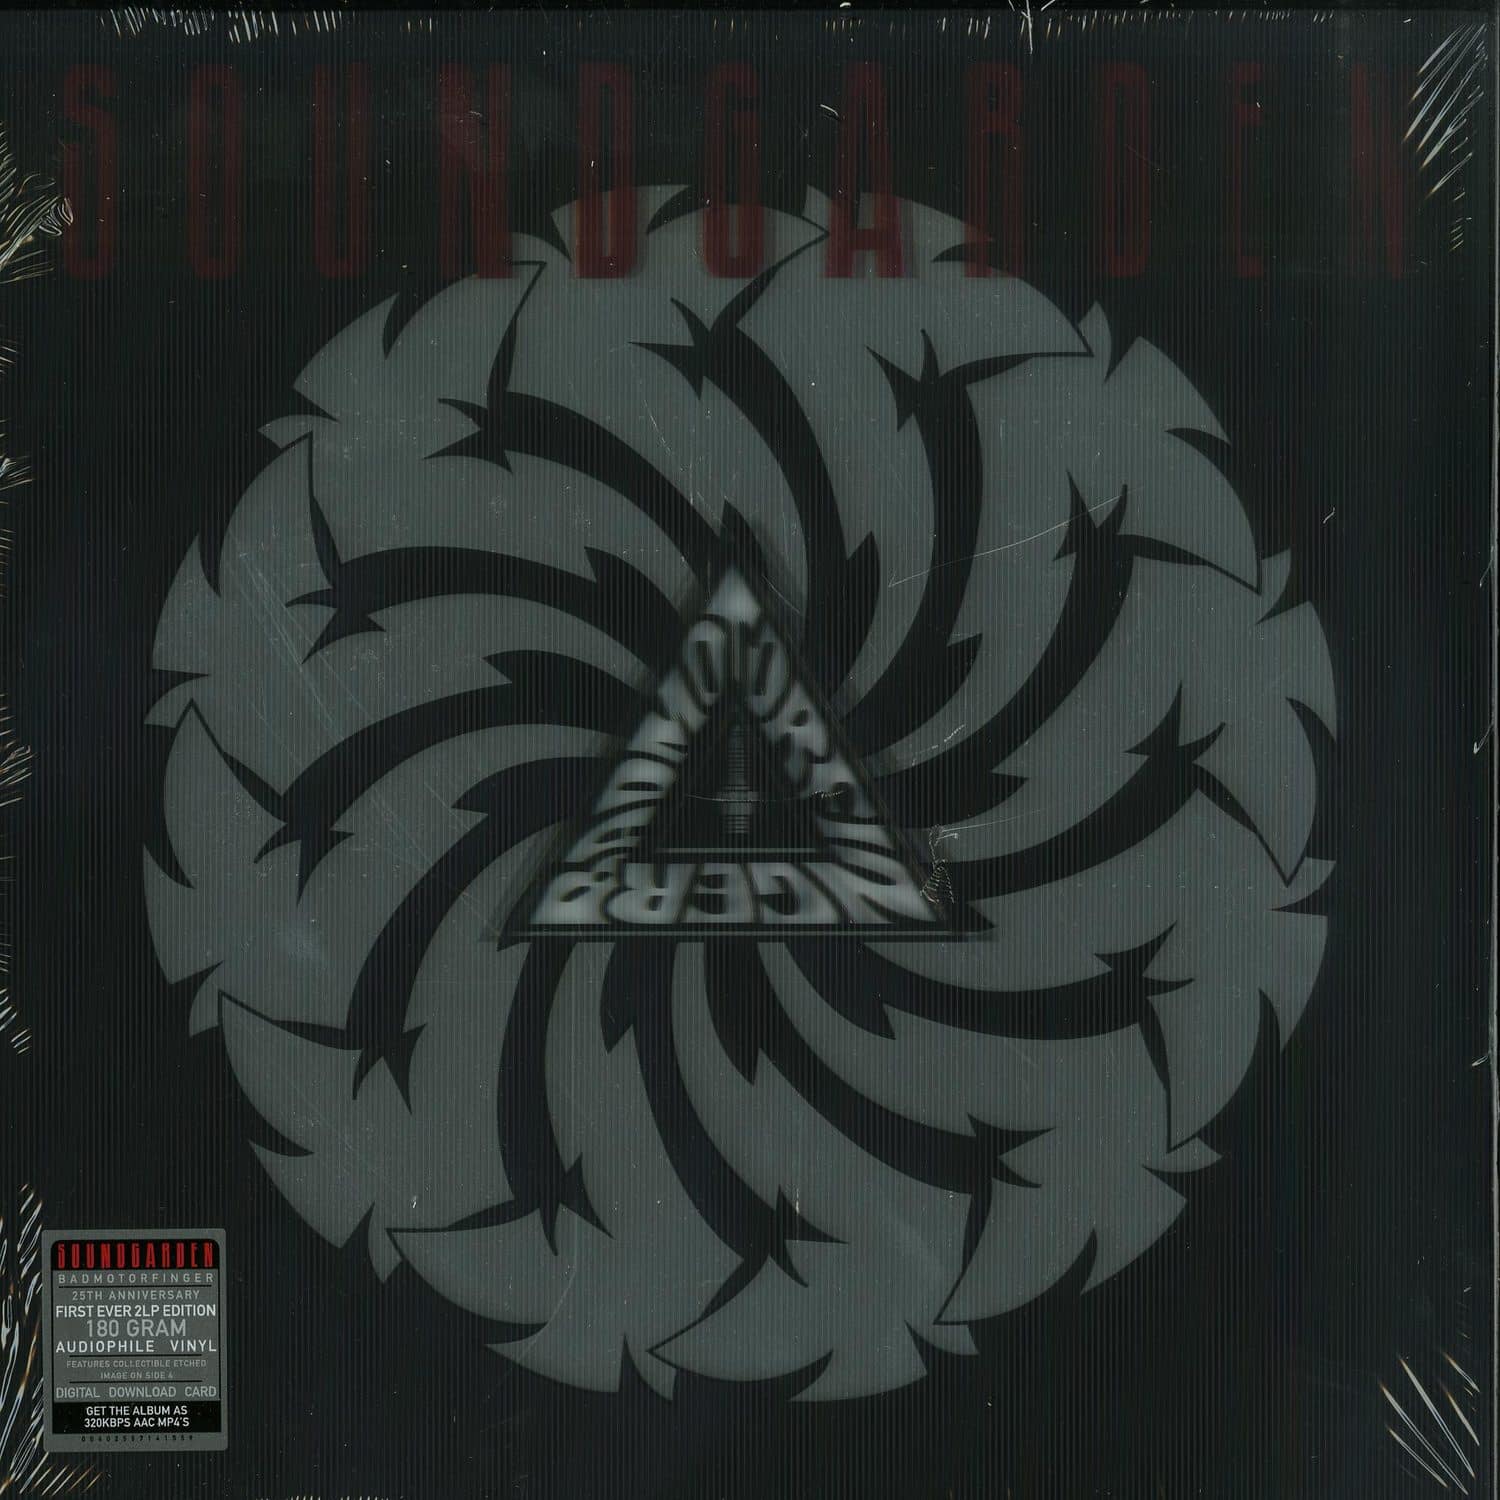 Soundgarden - BADMOTORFINGER 